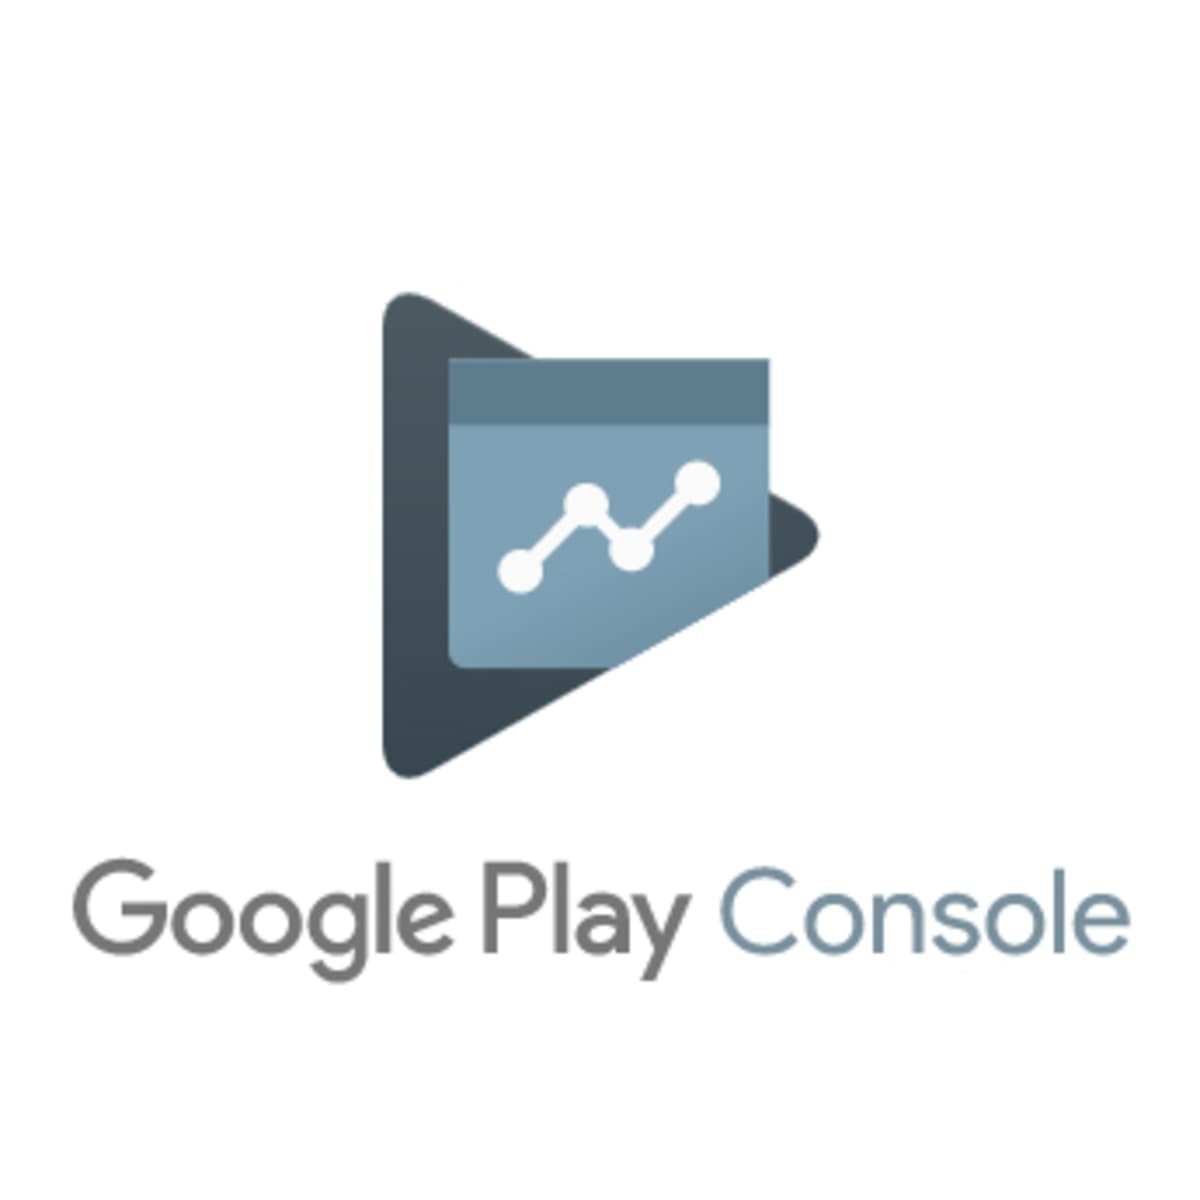 Google play console developer не работает. Плей консоль. Google Play Console. Google Play Console developer. Google Play developer Console icon.